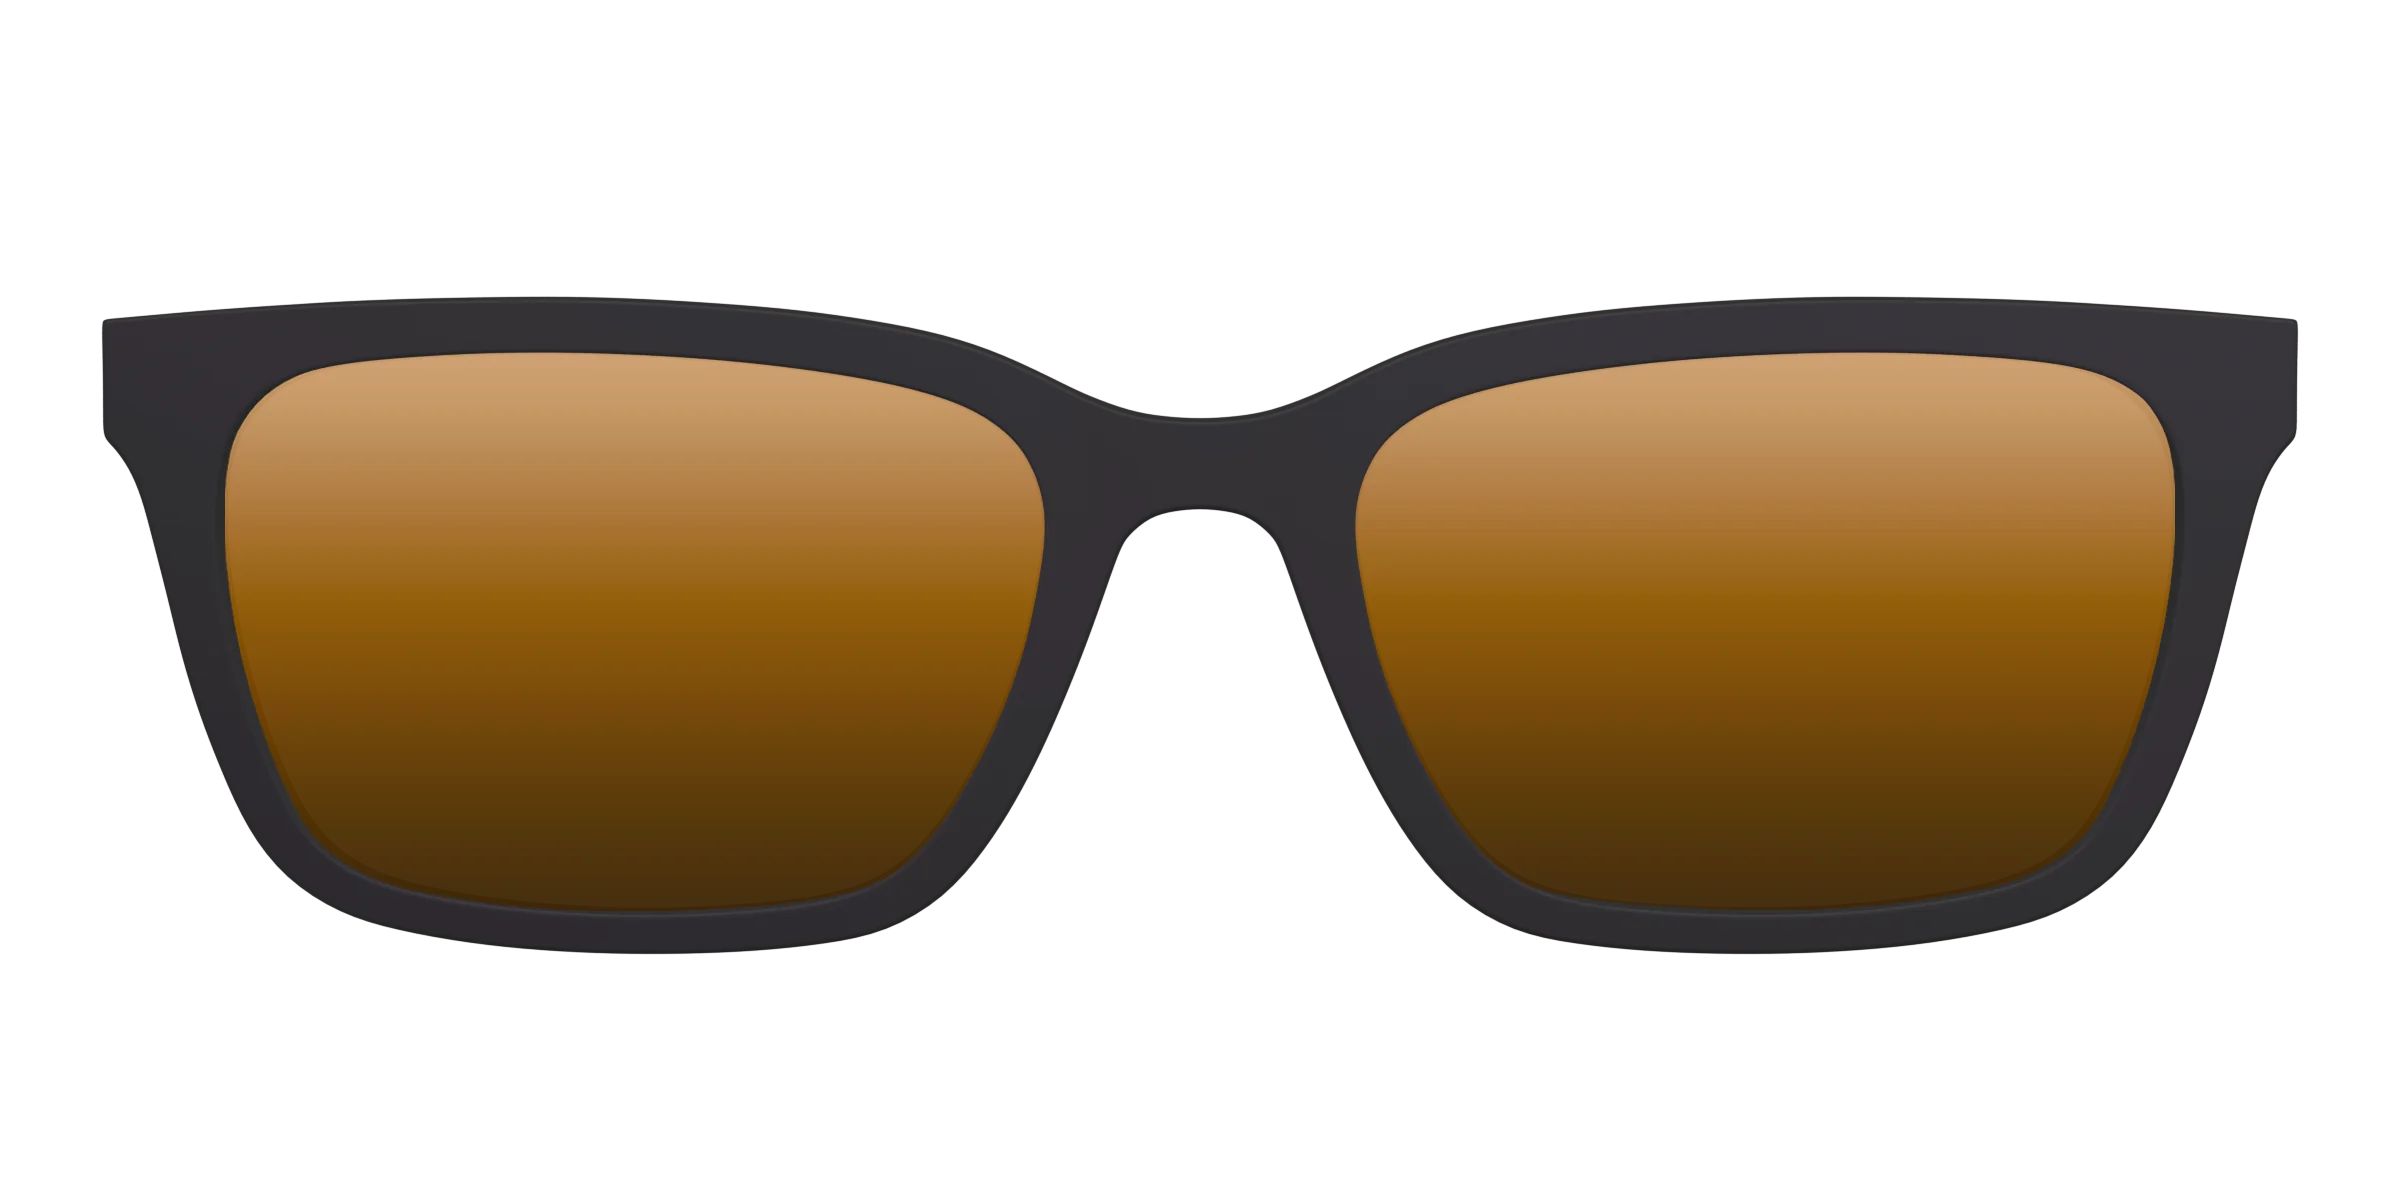 The Gold Reflective Sun Top | Pair Eyewear